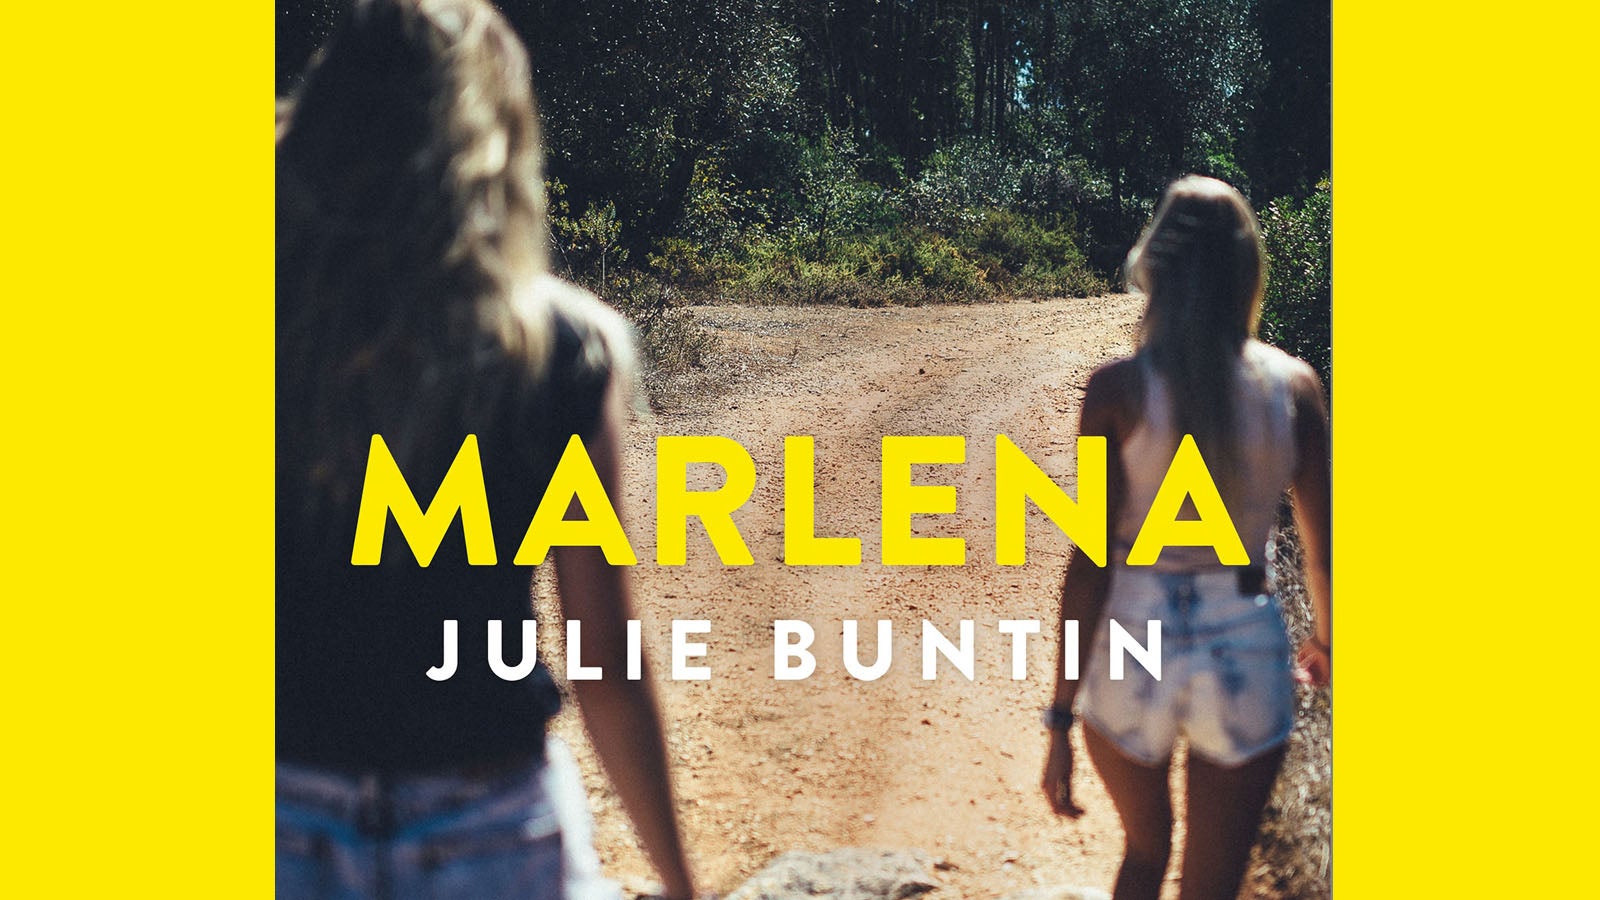 marlena julie buntin review